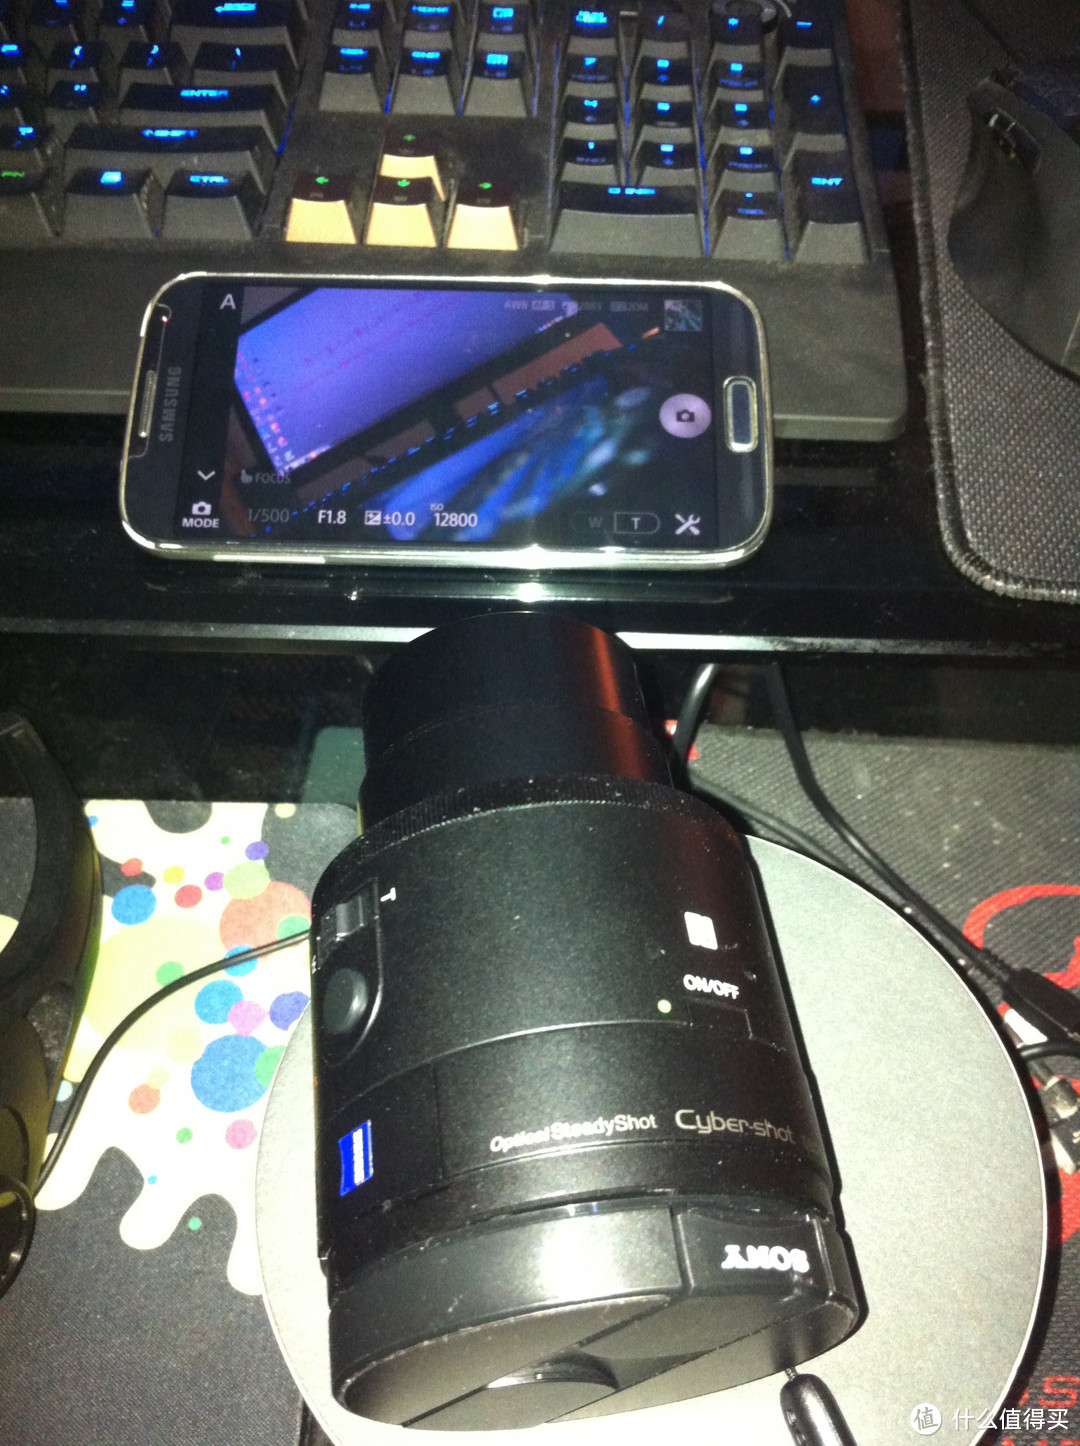 SONY 索尼 DSC-QX100 镜头式数码相机